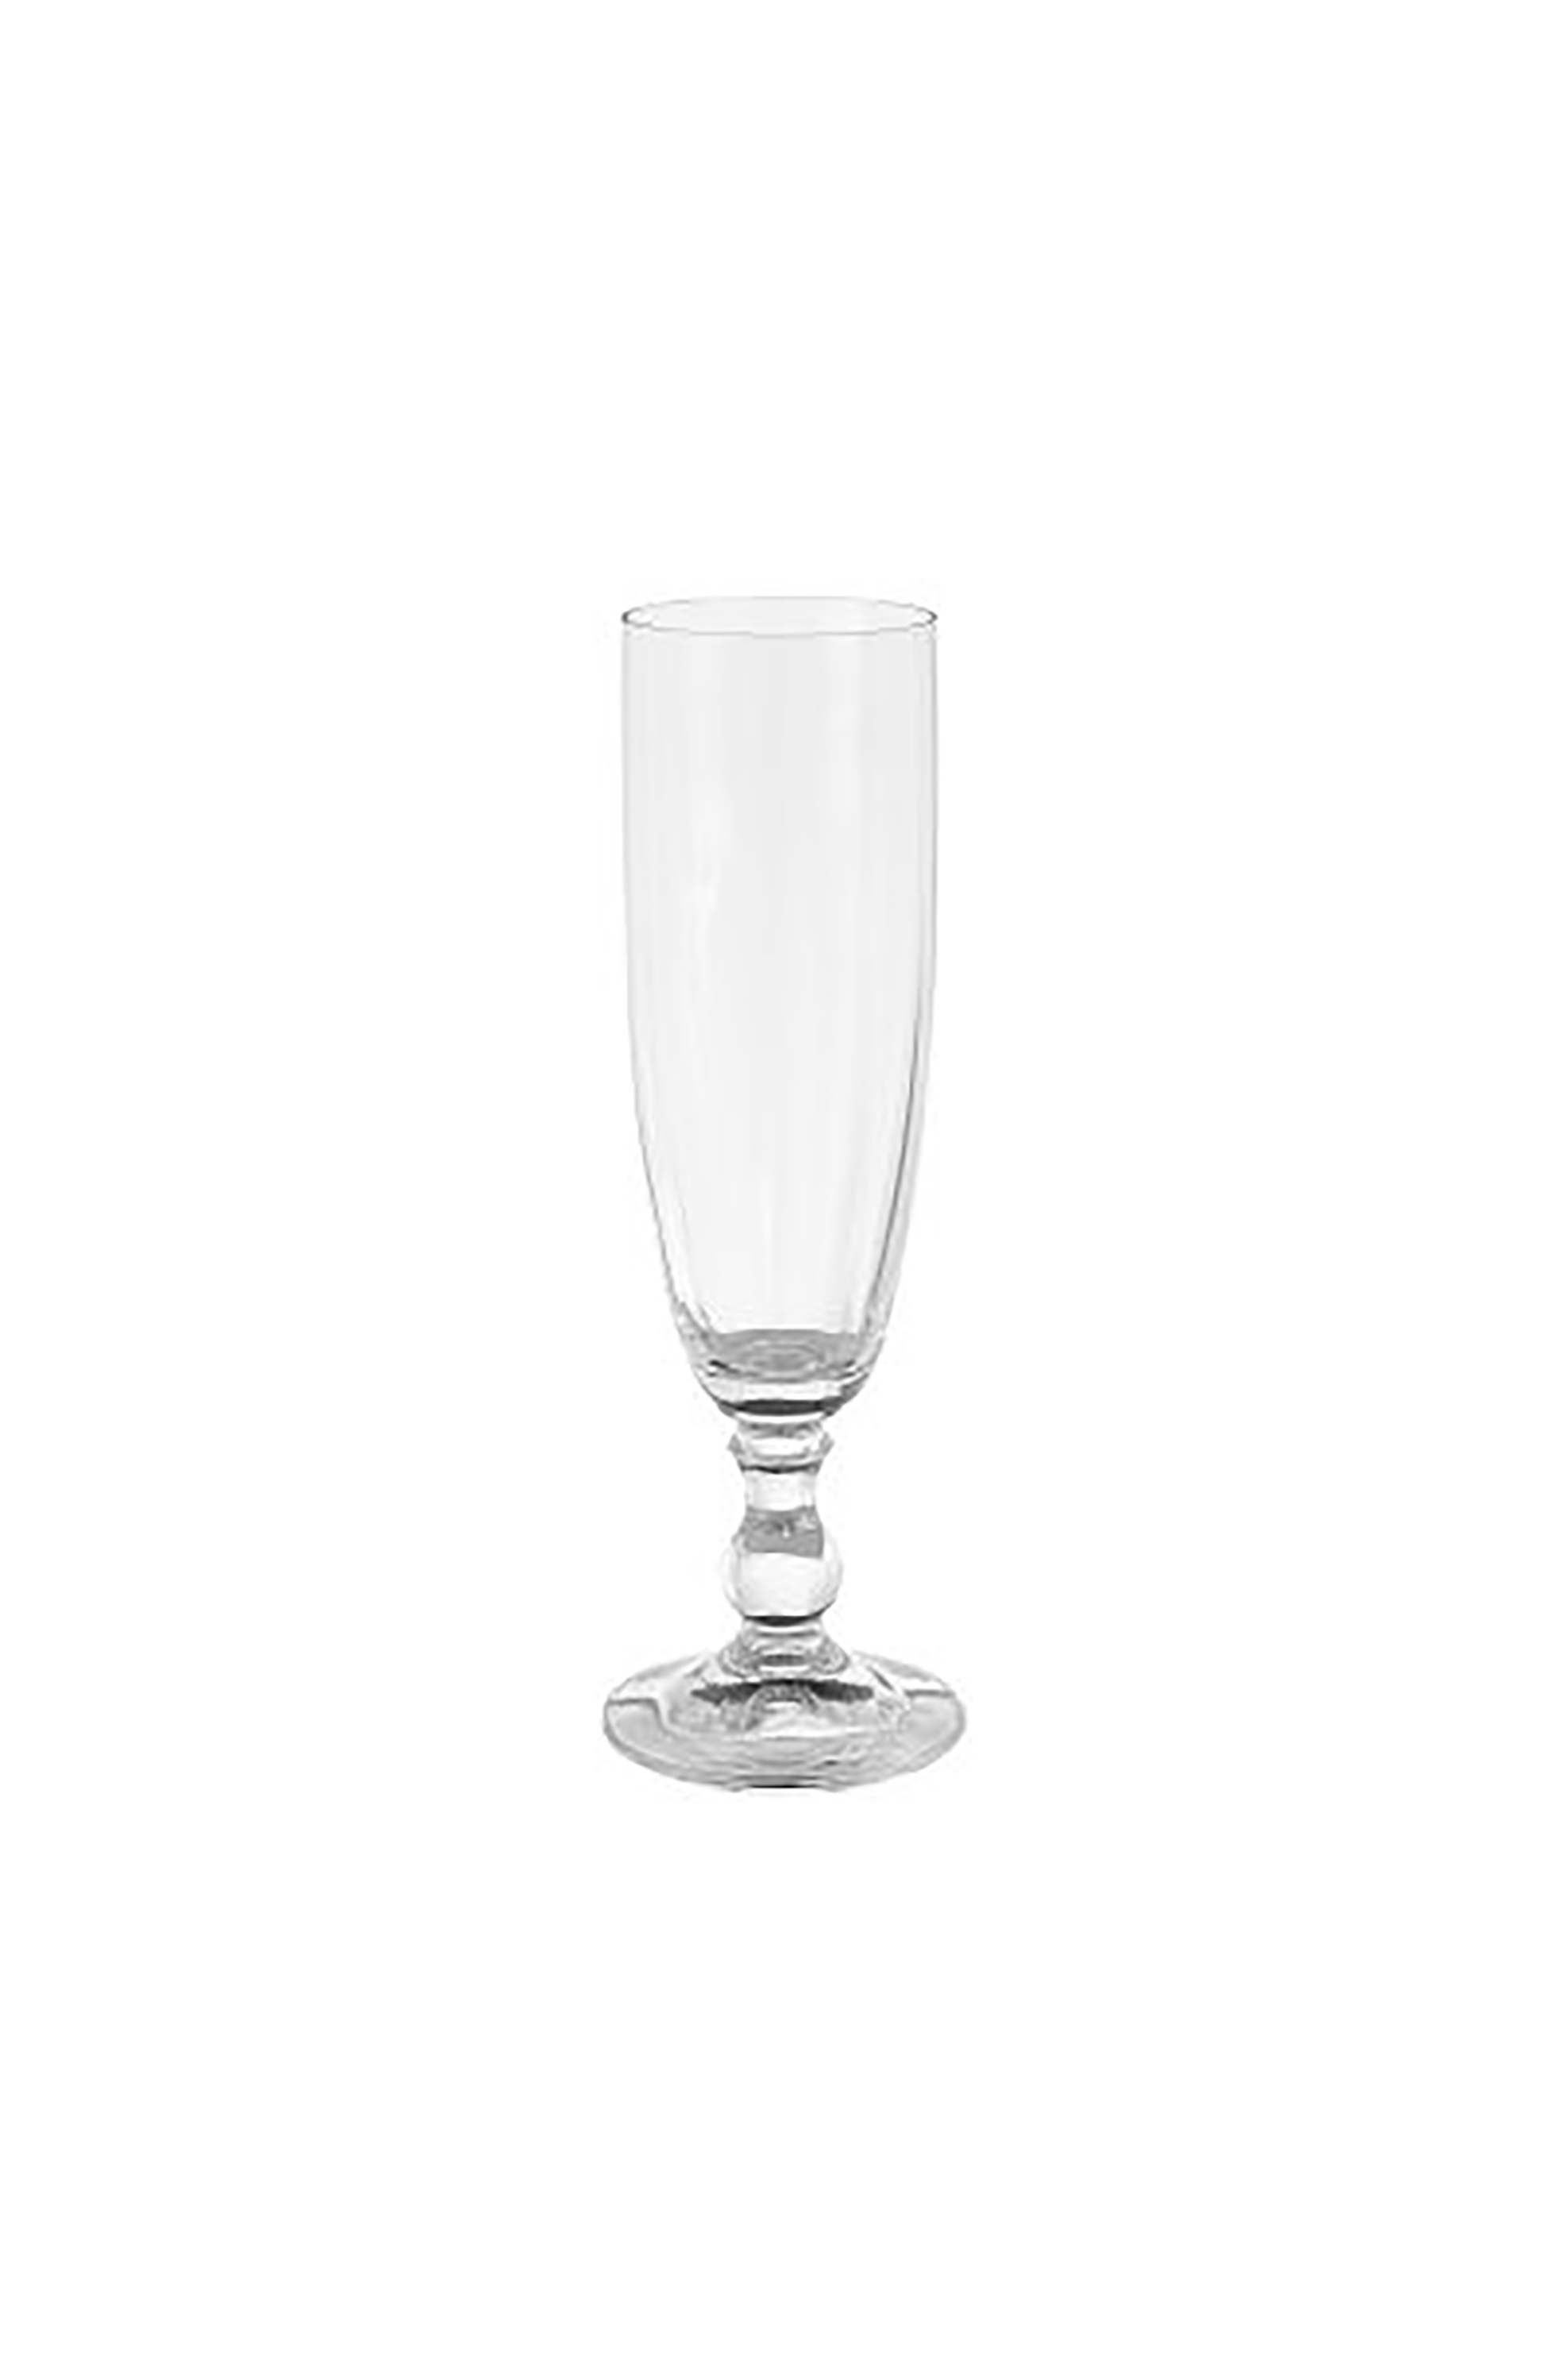 Home > ΚΟΥΖΙΝΑ > Υαλικά > Ποτήρια Coincasa γυάλινο κολωνάτο ποτήρι 15 cm - 006358062 Διάφανο